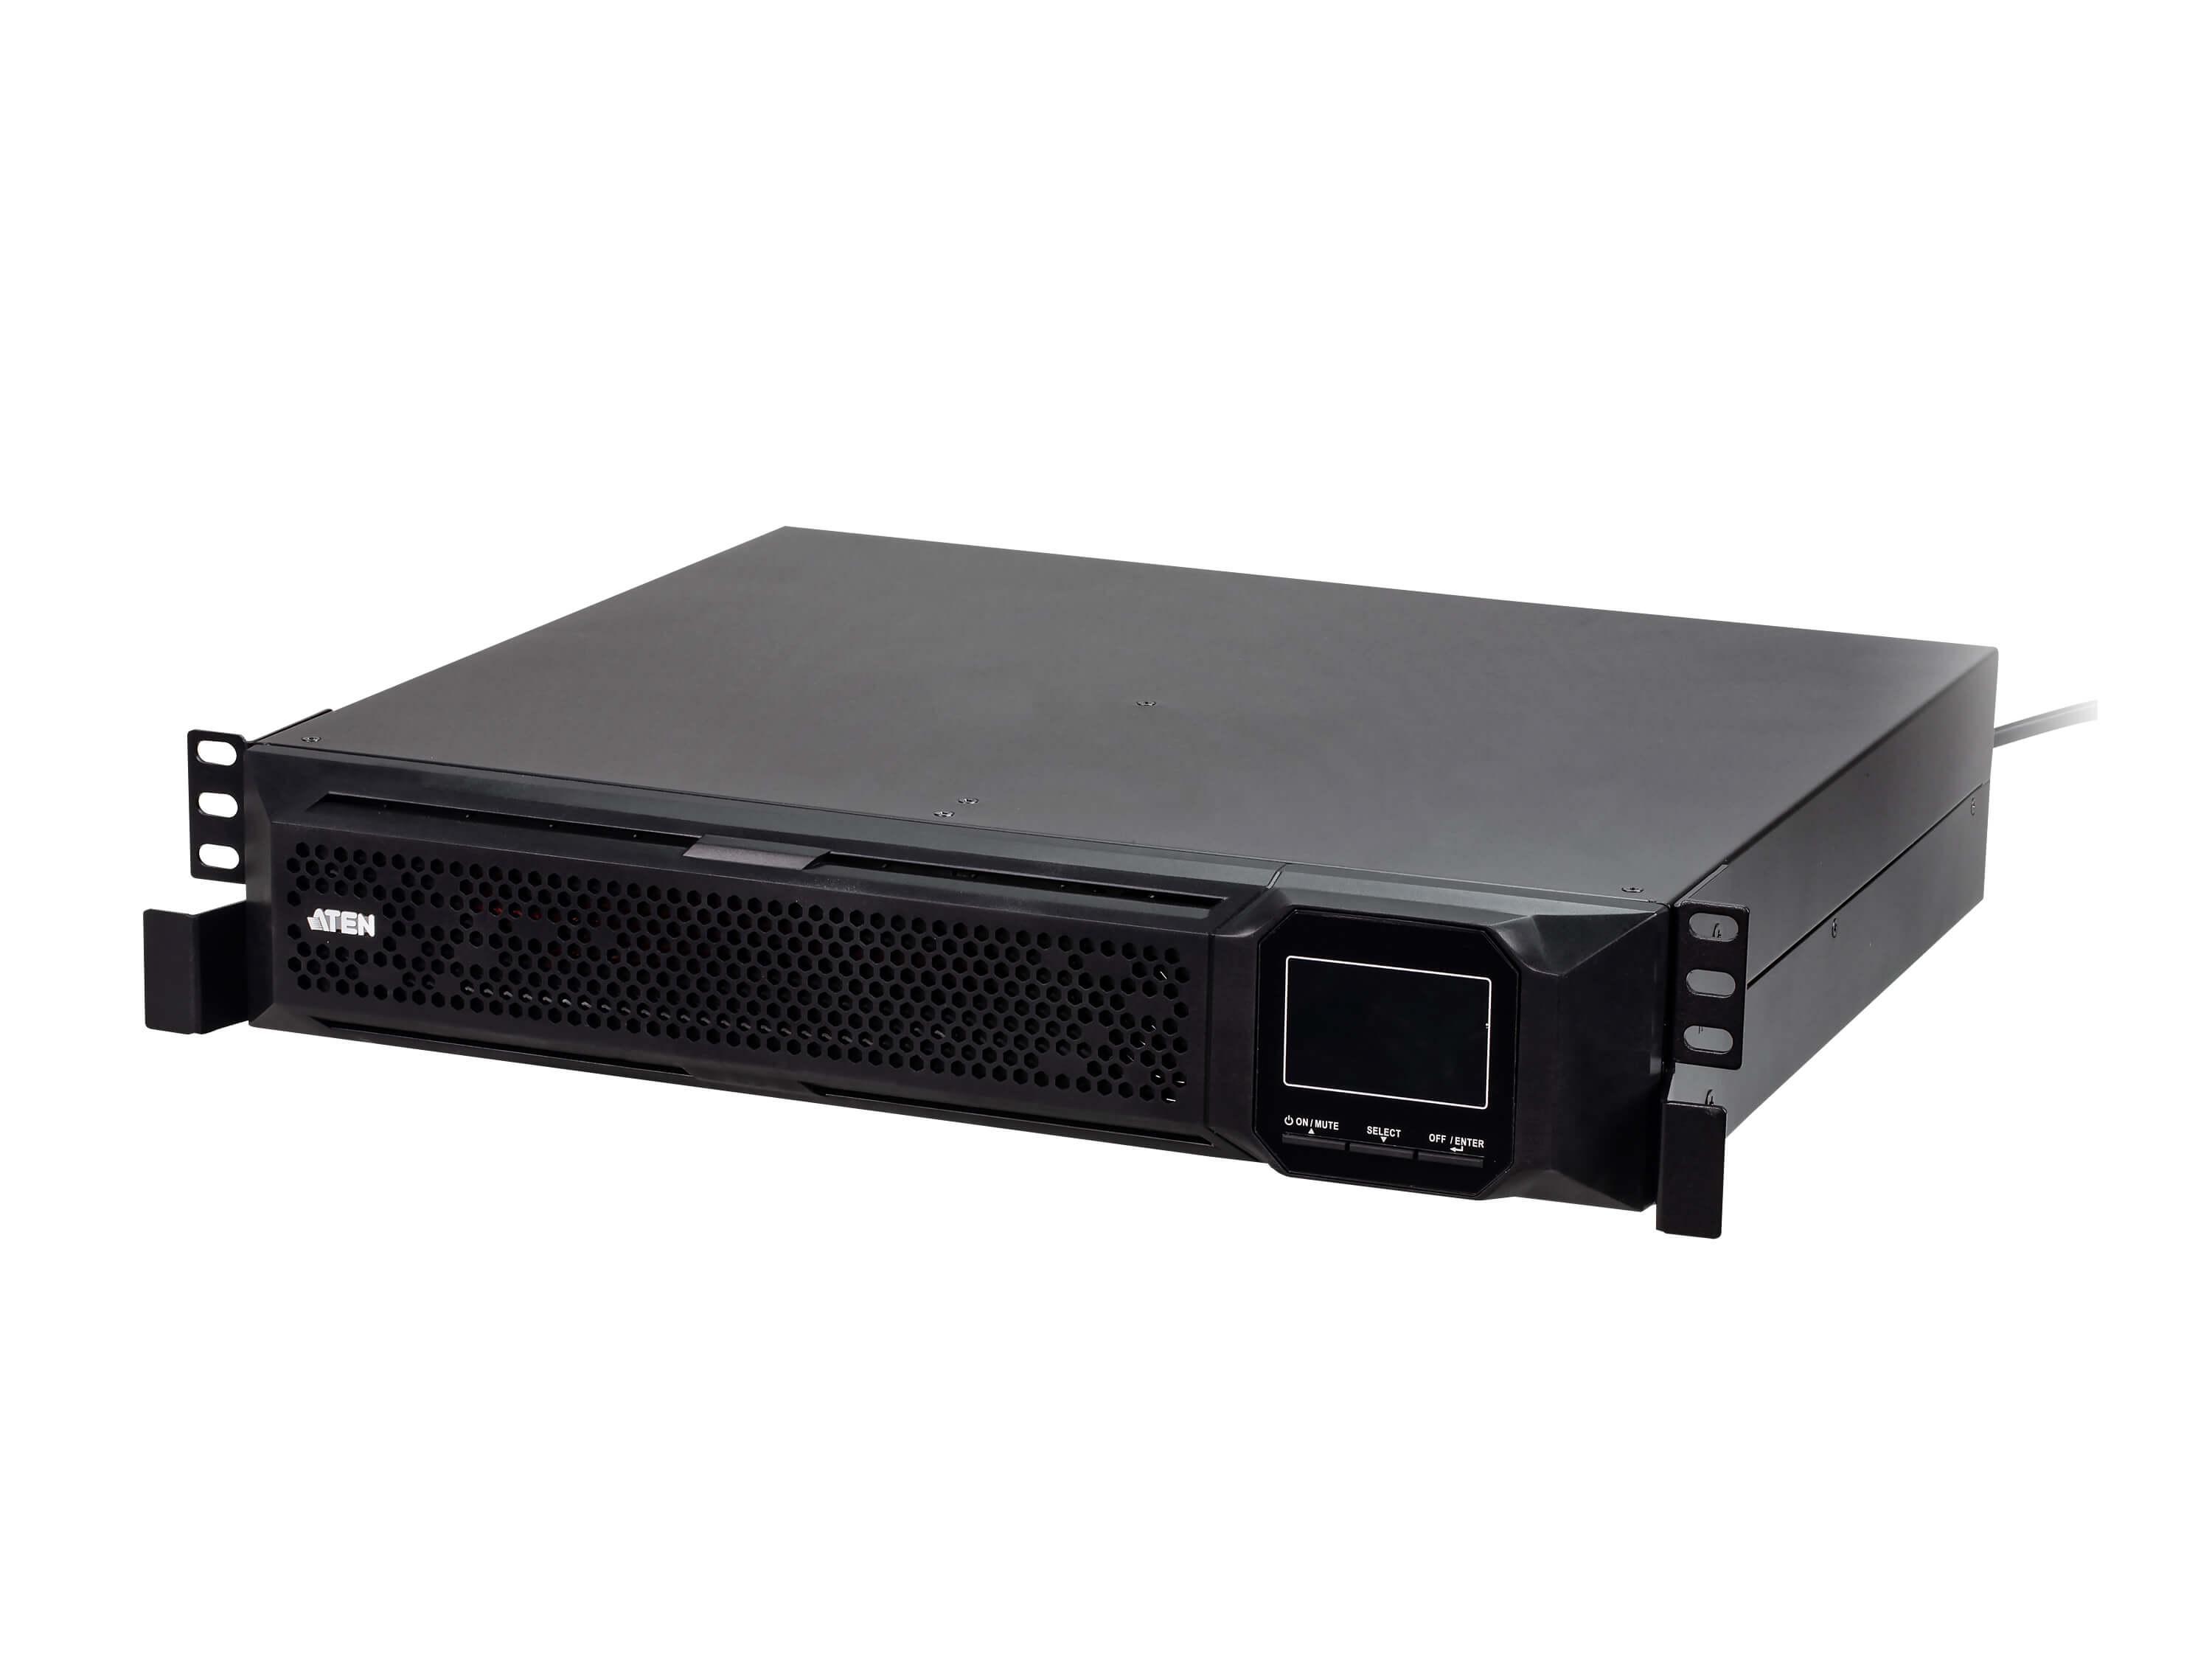 OL3000LV 3000VA/2880Watts LV Professional Online UPS by Aten